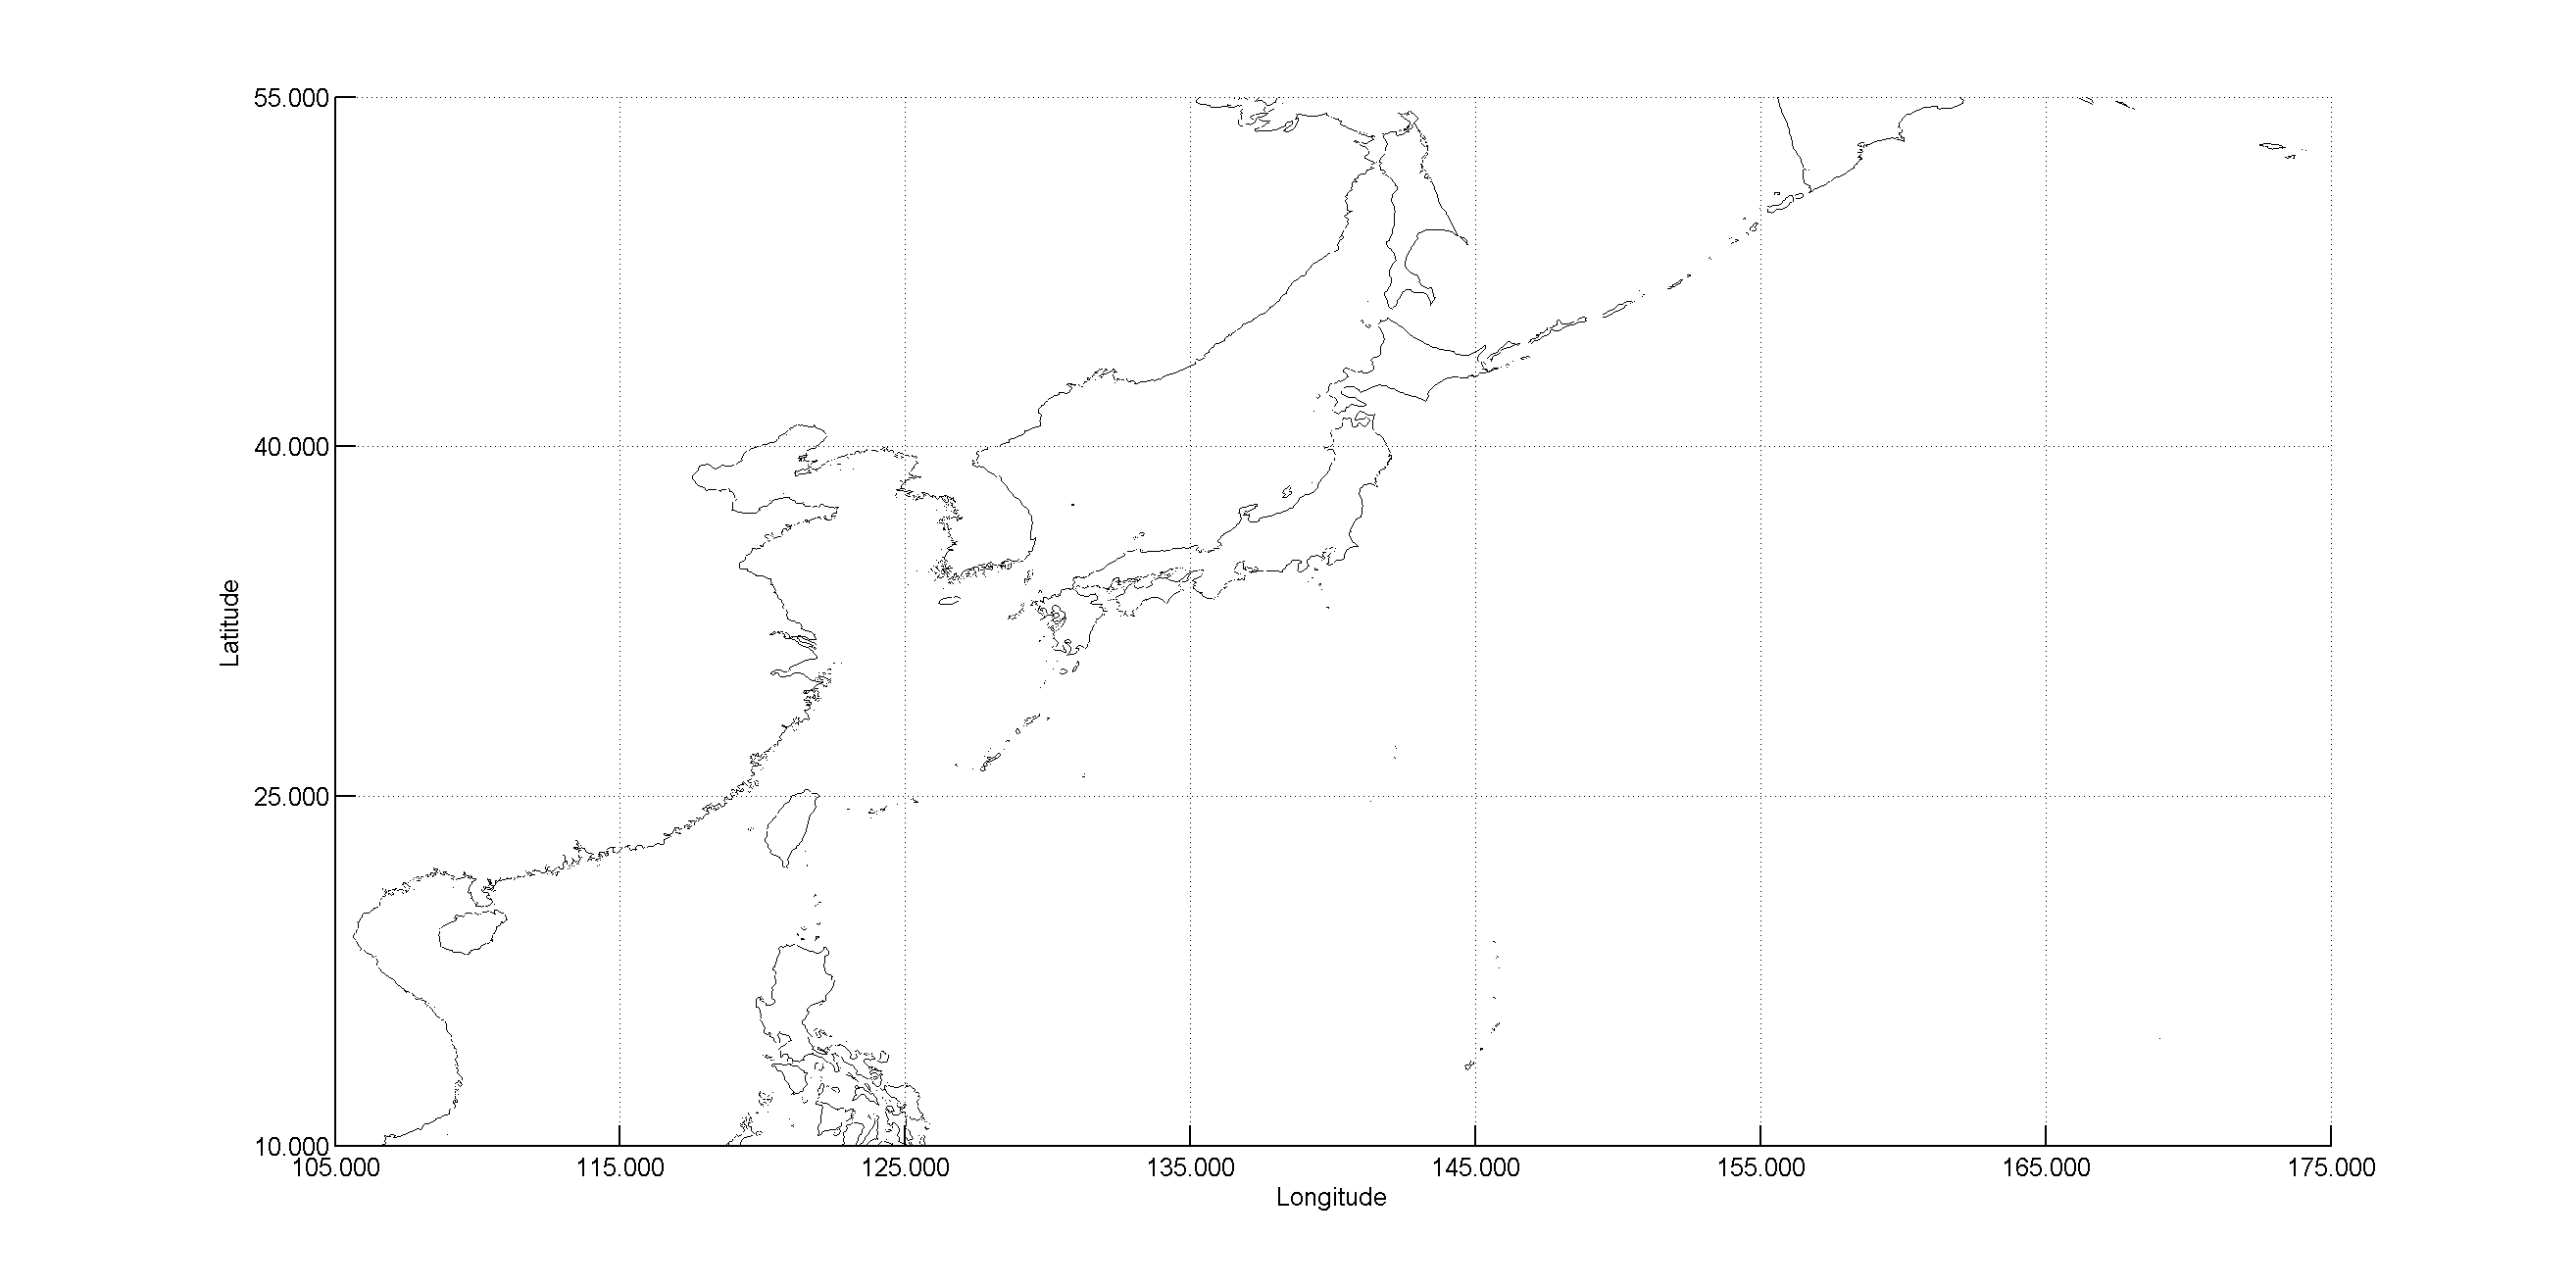 CYCLE_176 - Japan Ascending passes